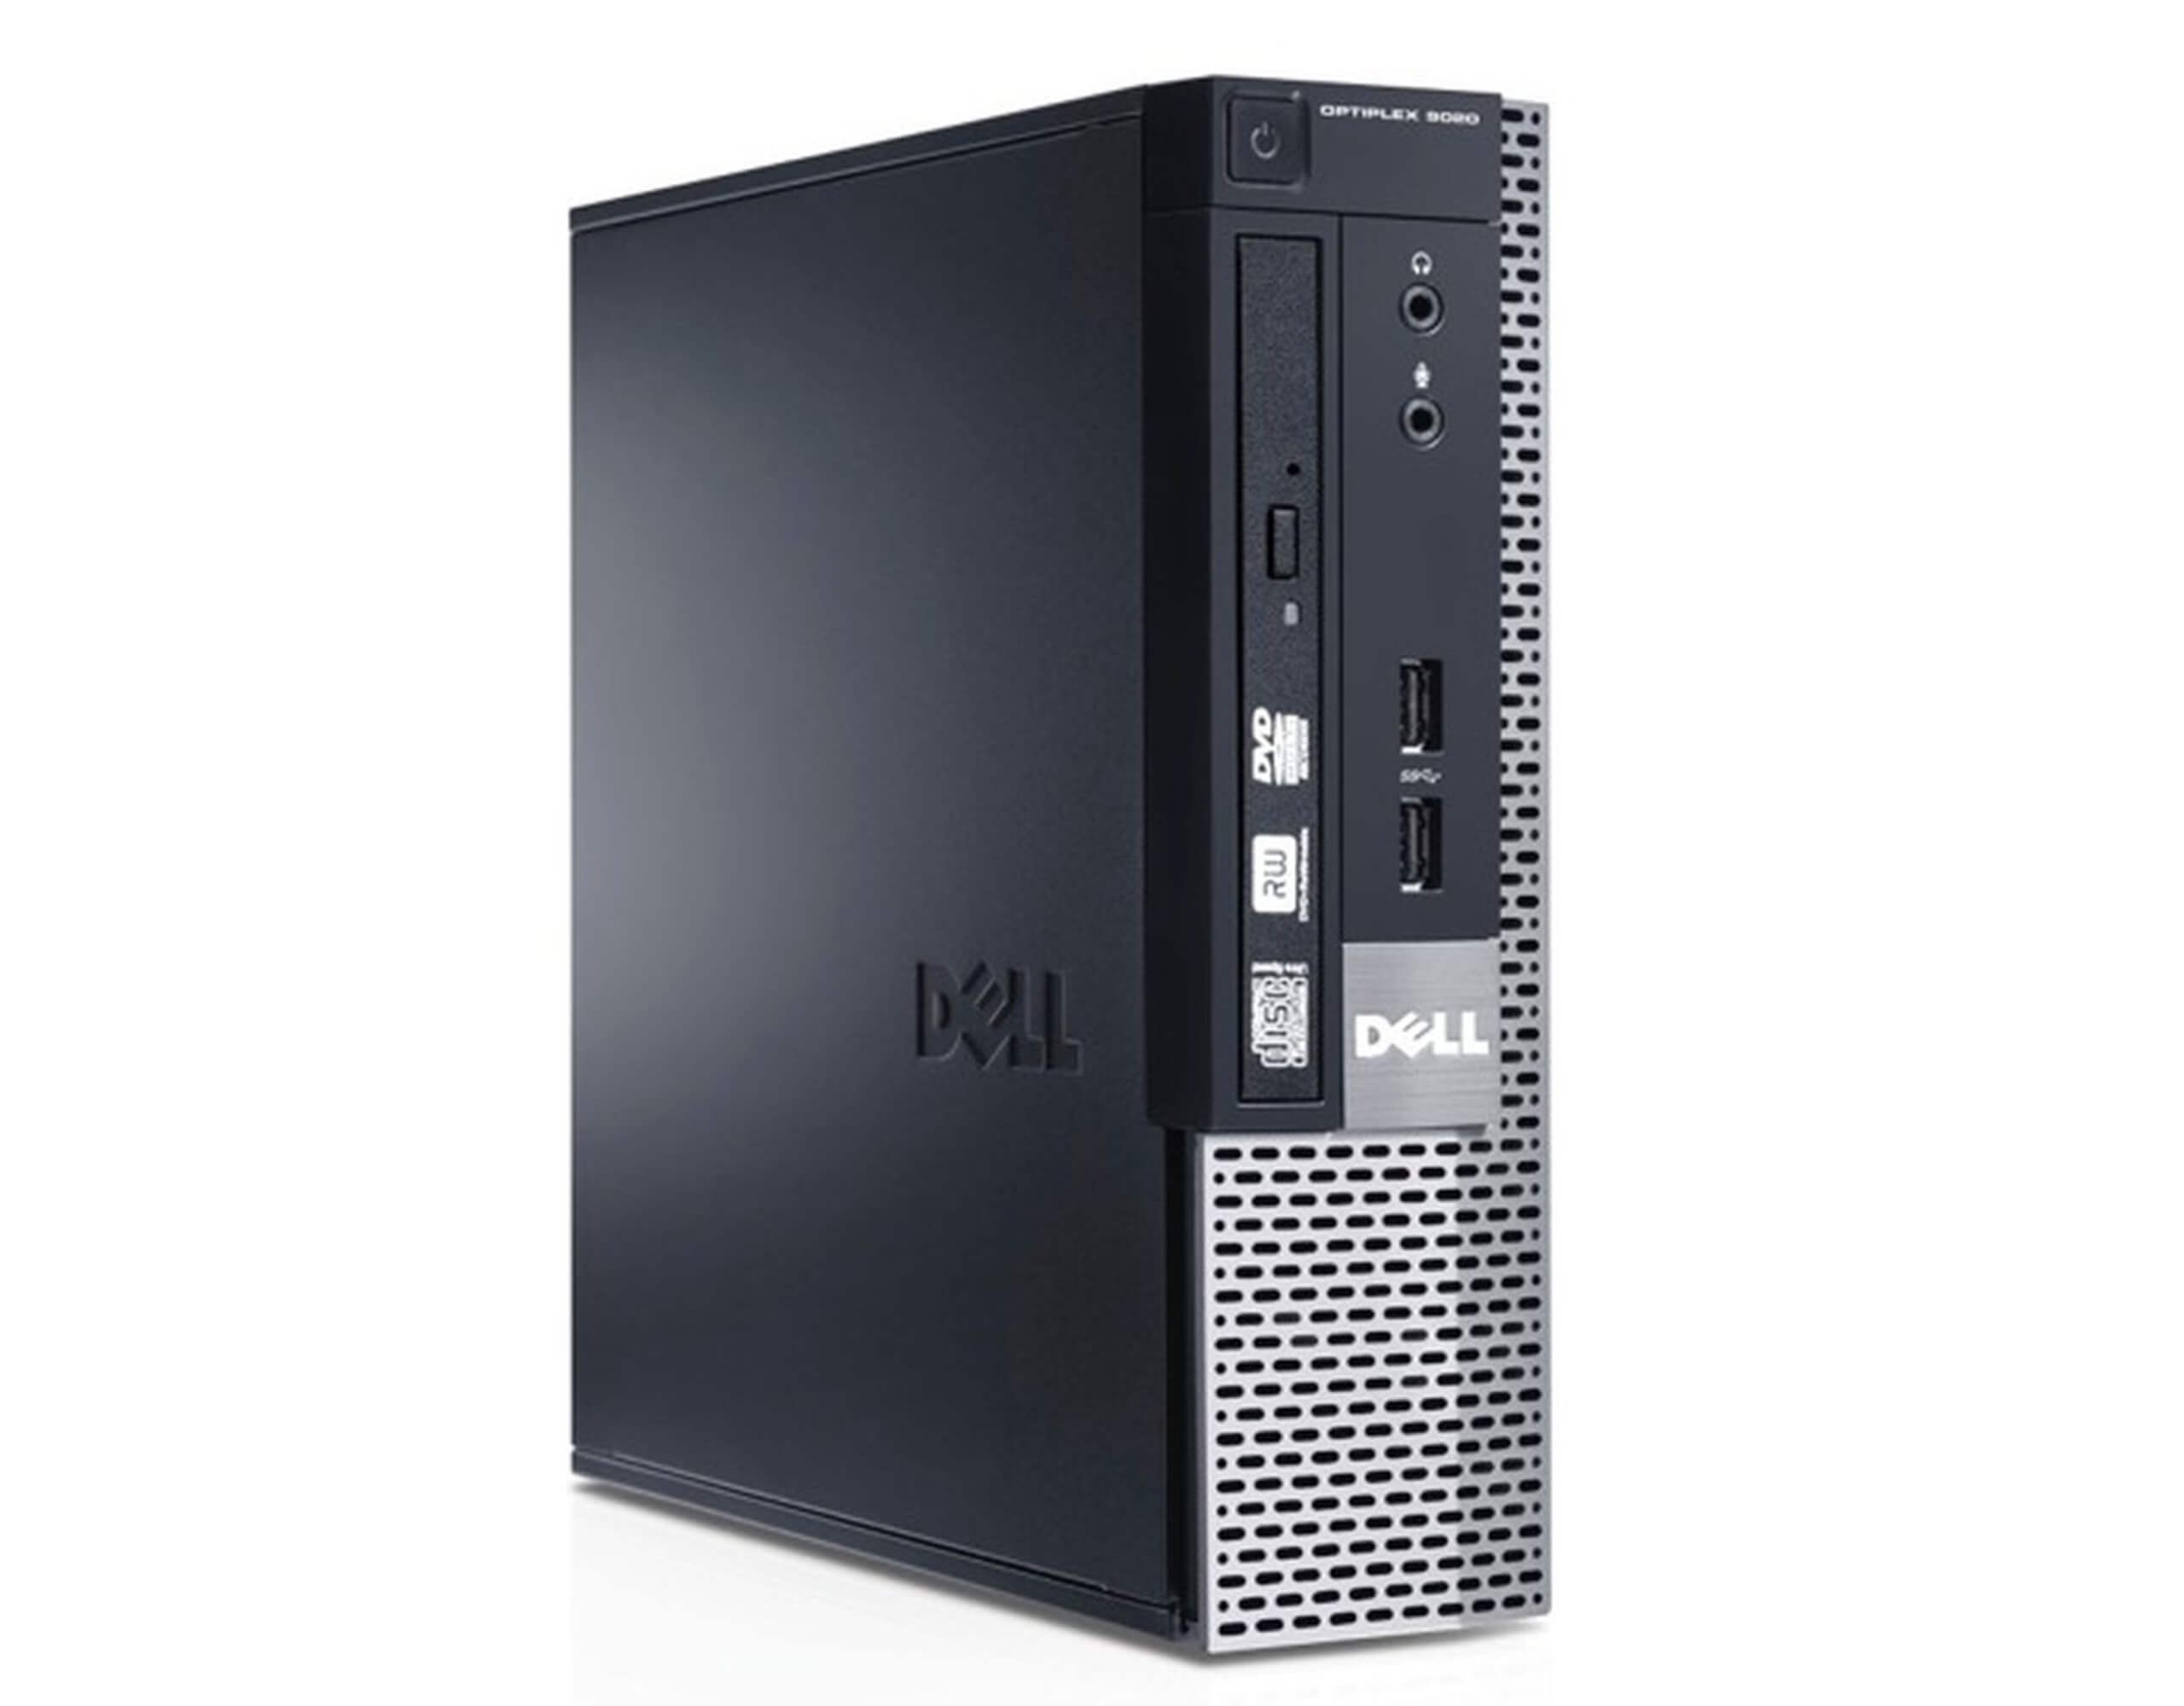 DELL 9020 USFF I5-4590S 3.0 / 8192 MB DDR3 / 320 GB / DVD-RW / WINDOWS 10 HOME